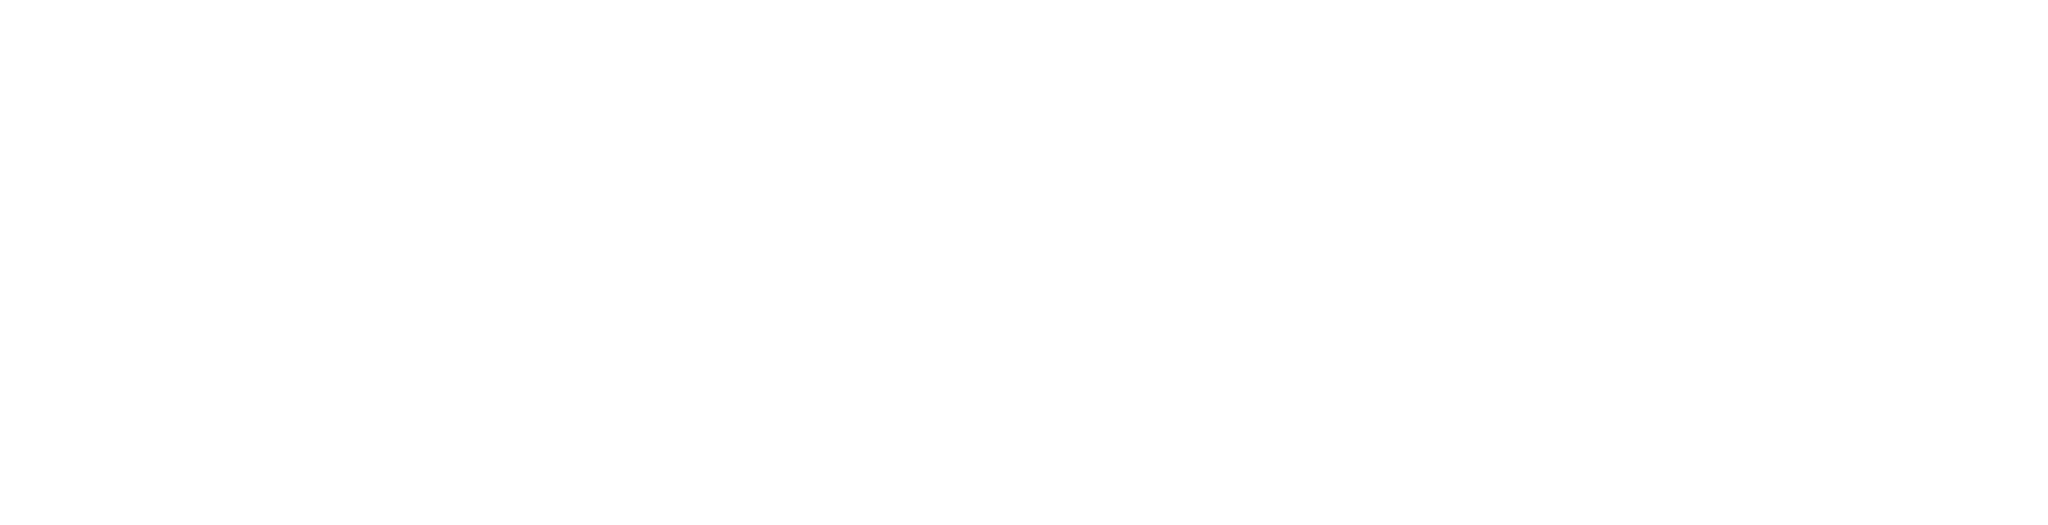 kpan-logo-full-white_kpan-white-border-transparent-bg